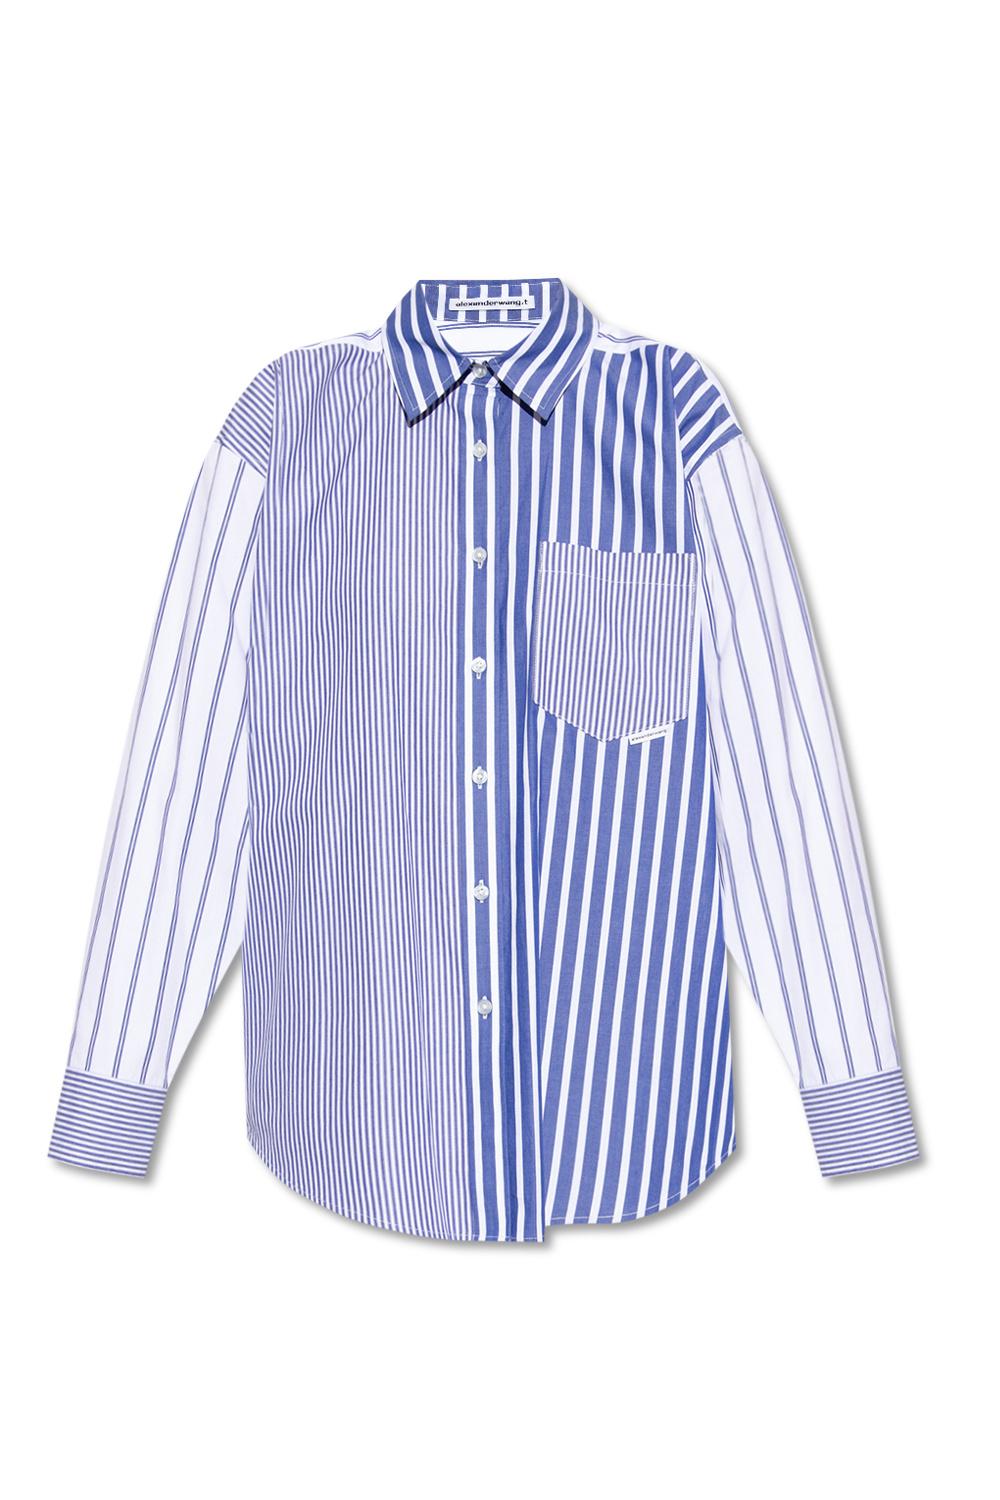 T Alexander Wang Women's Sheer Striped Long Sleeve T-Shirt Blue Size S -  Shop Linda's Stuff